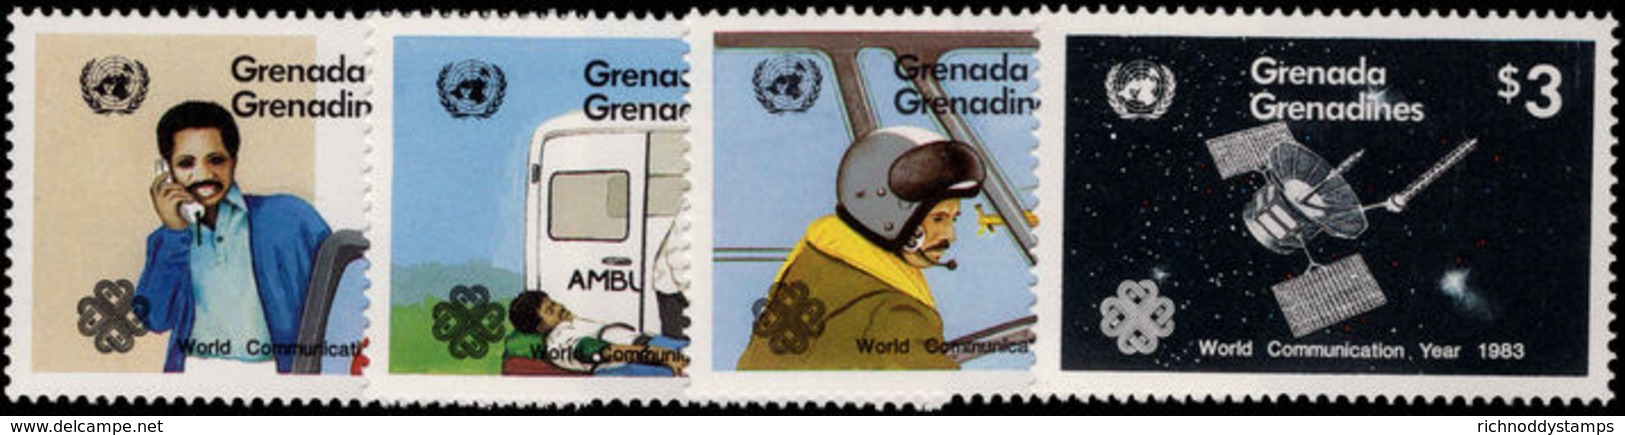 Grenada Grenadines 1983 World Communications Year Unmounted Mint. - Grenada (1974-...)